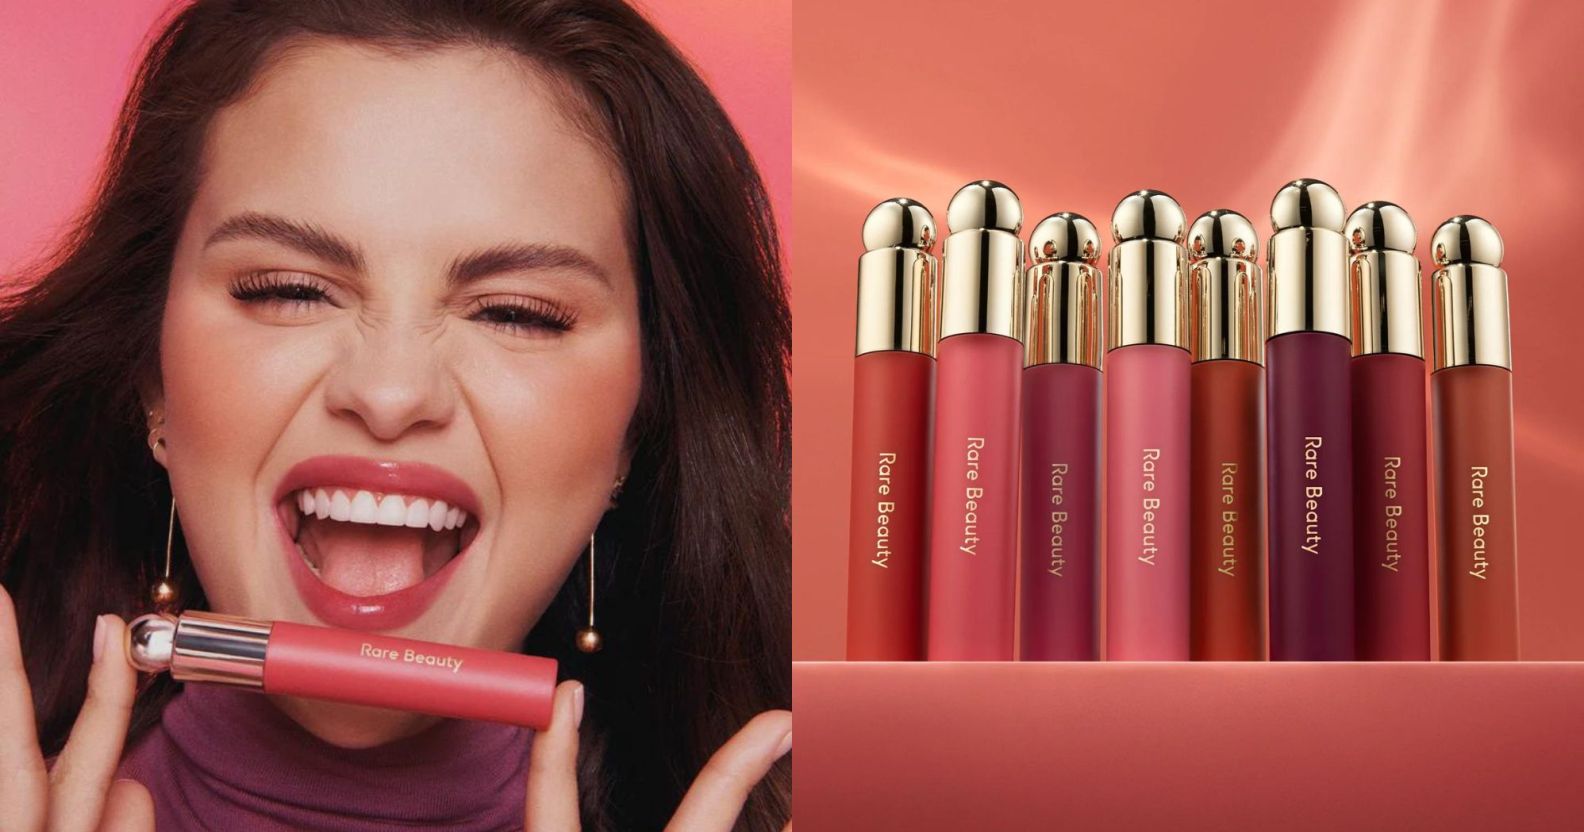 Selena Gomez's Rare Beauty announces new 'innovative' lip product